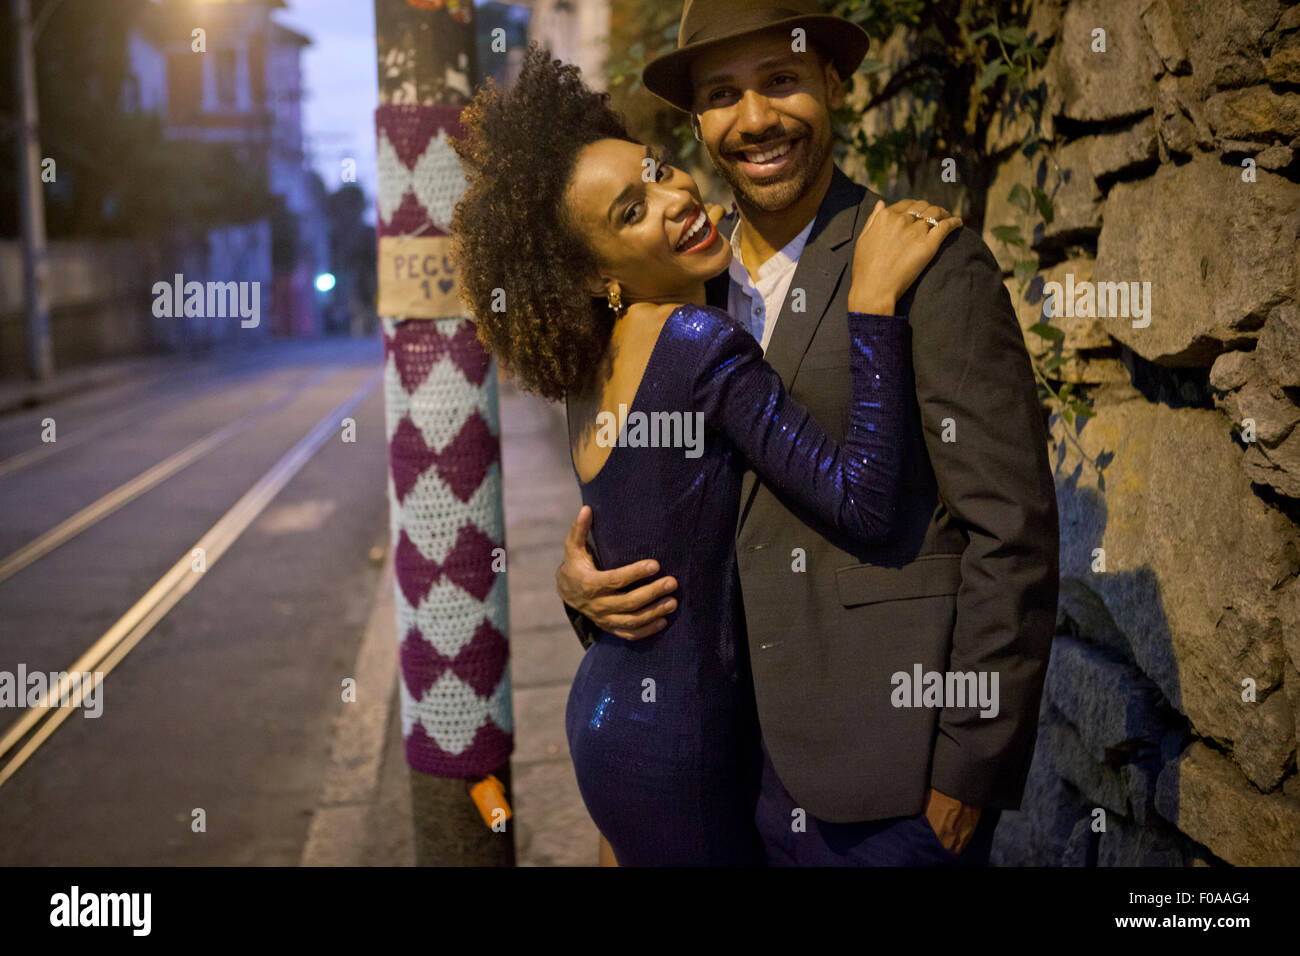 Portrait de couple hugging in street at night Banque D'Images